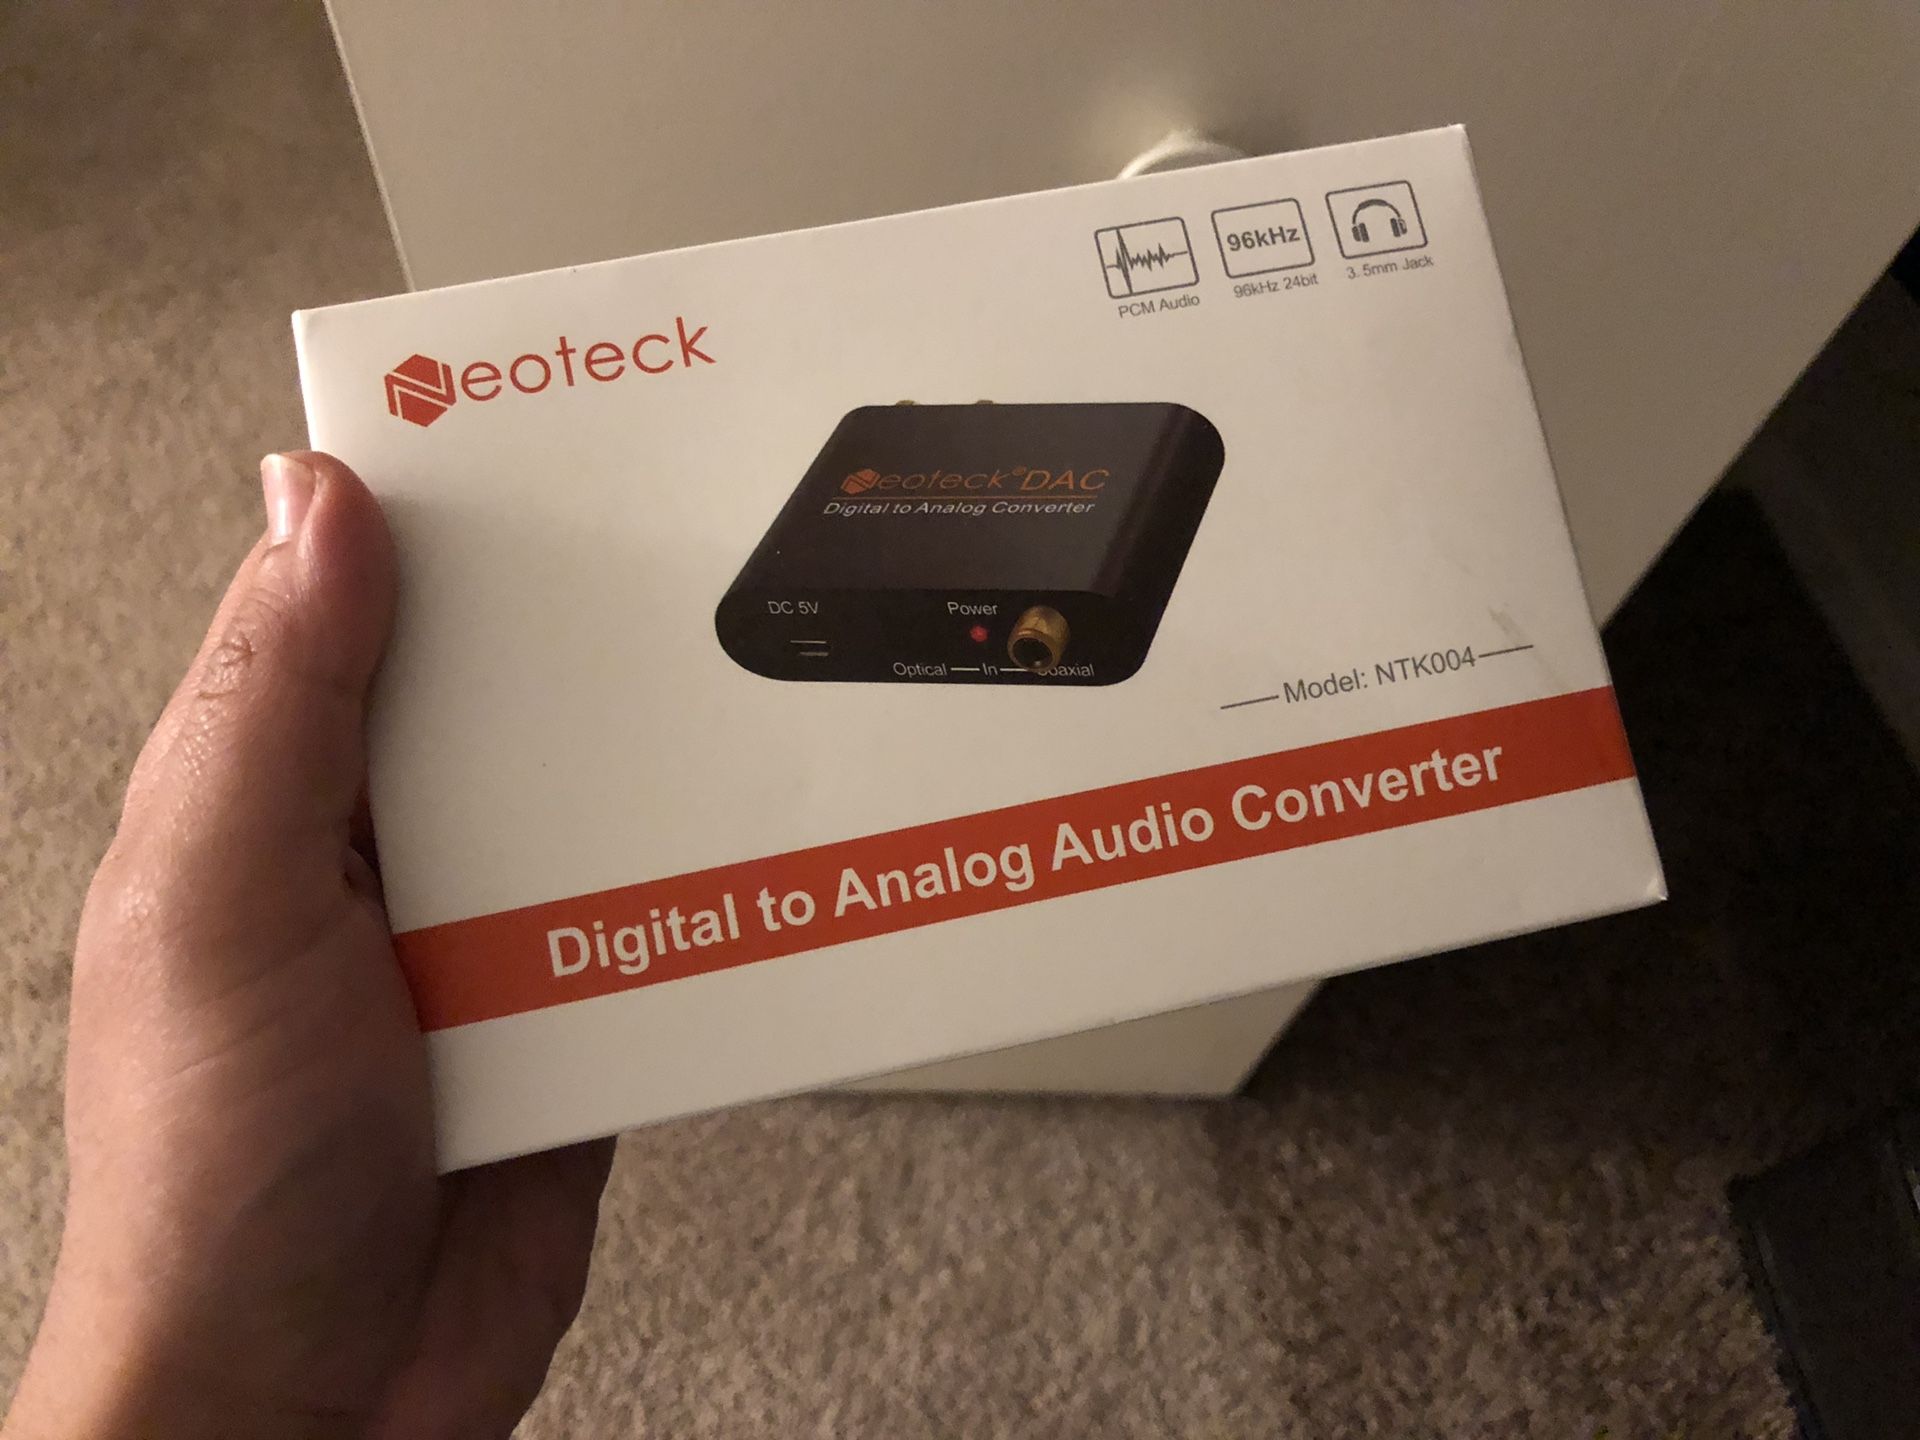 Digital to Analog convertor by Neoteck